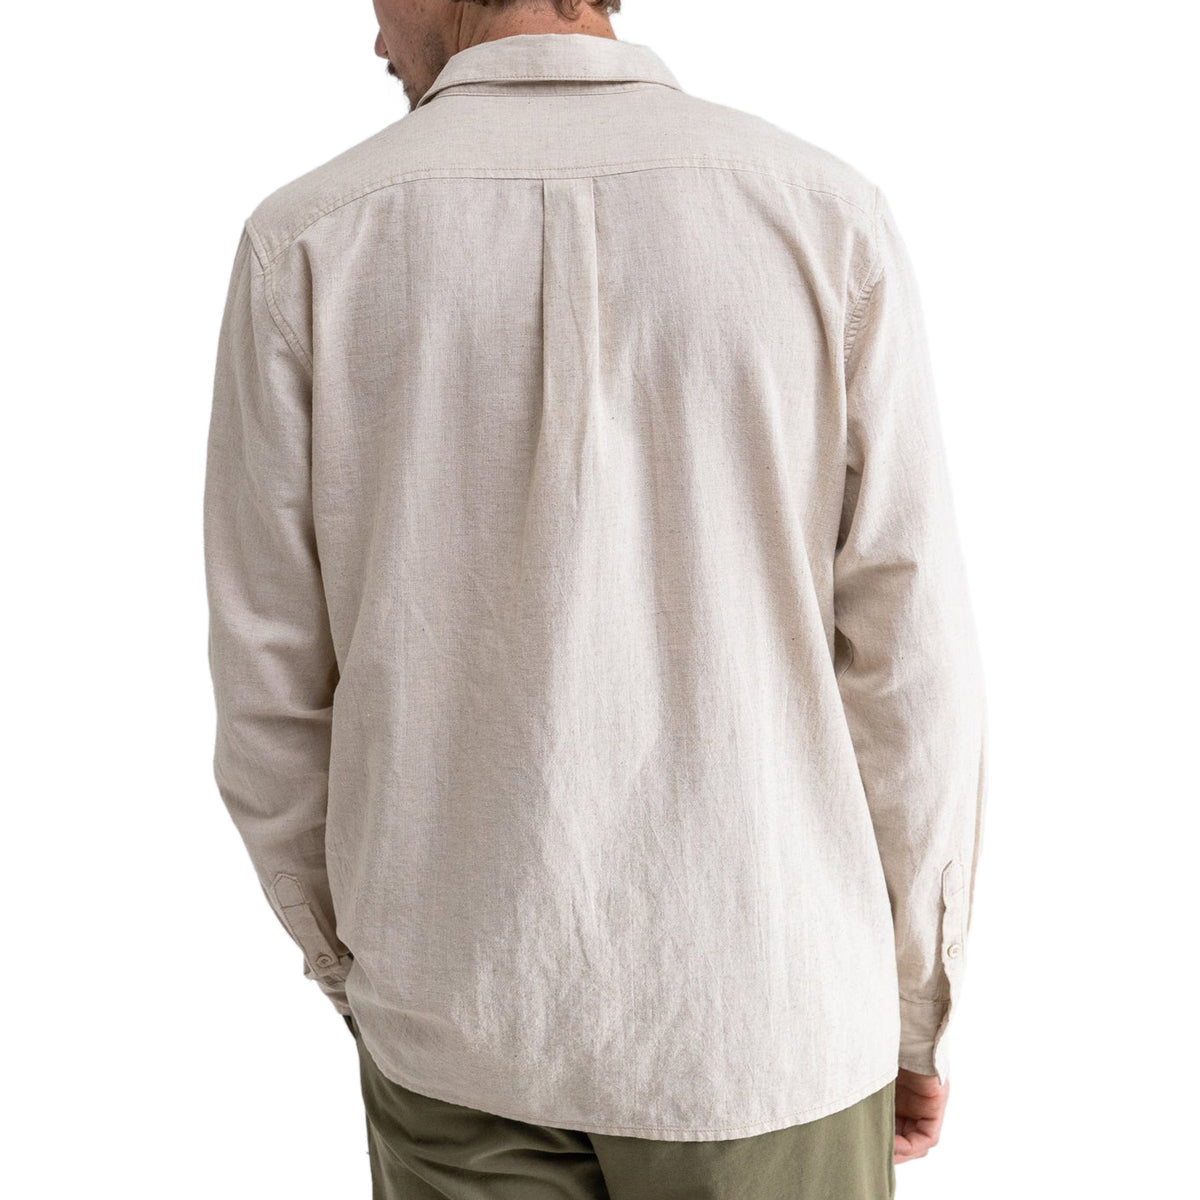 Rhythm Classic Linen Long Sleeve Shirt - Sand image 2